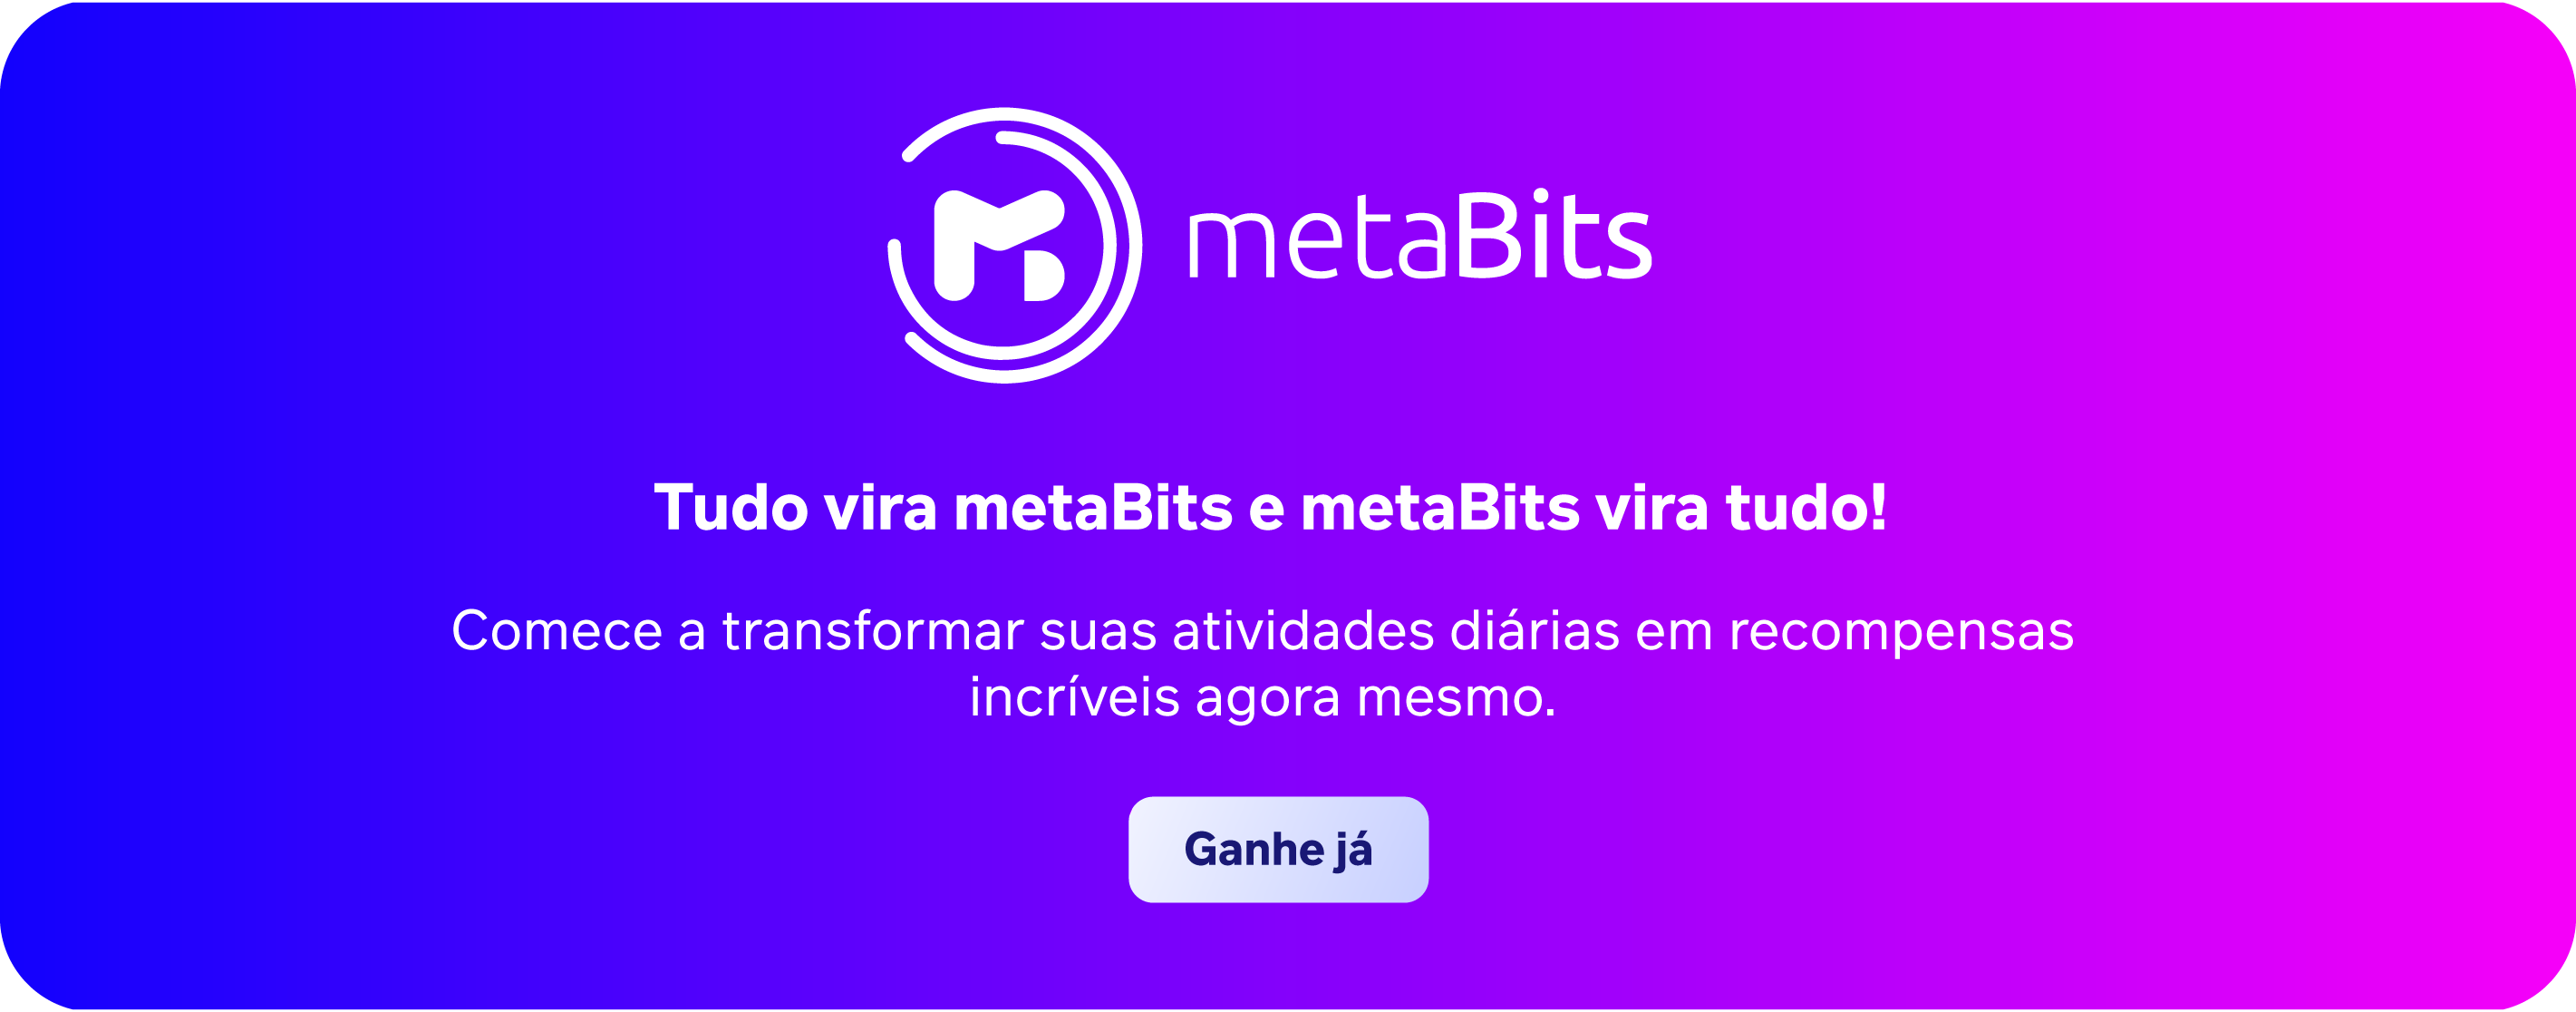 Tudo vira metaBits e metaBits vira tudo